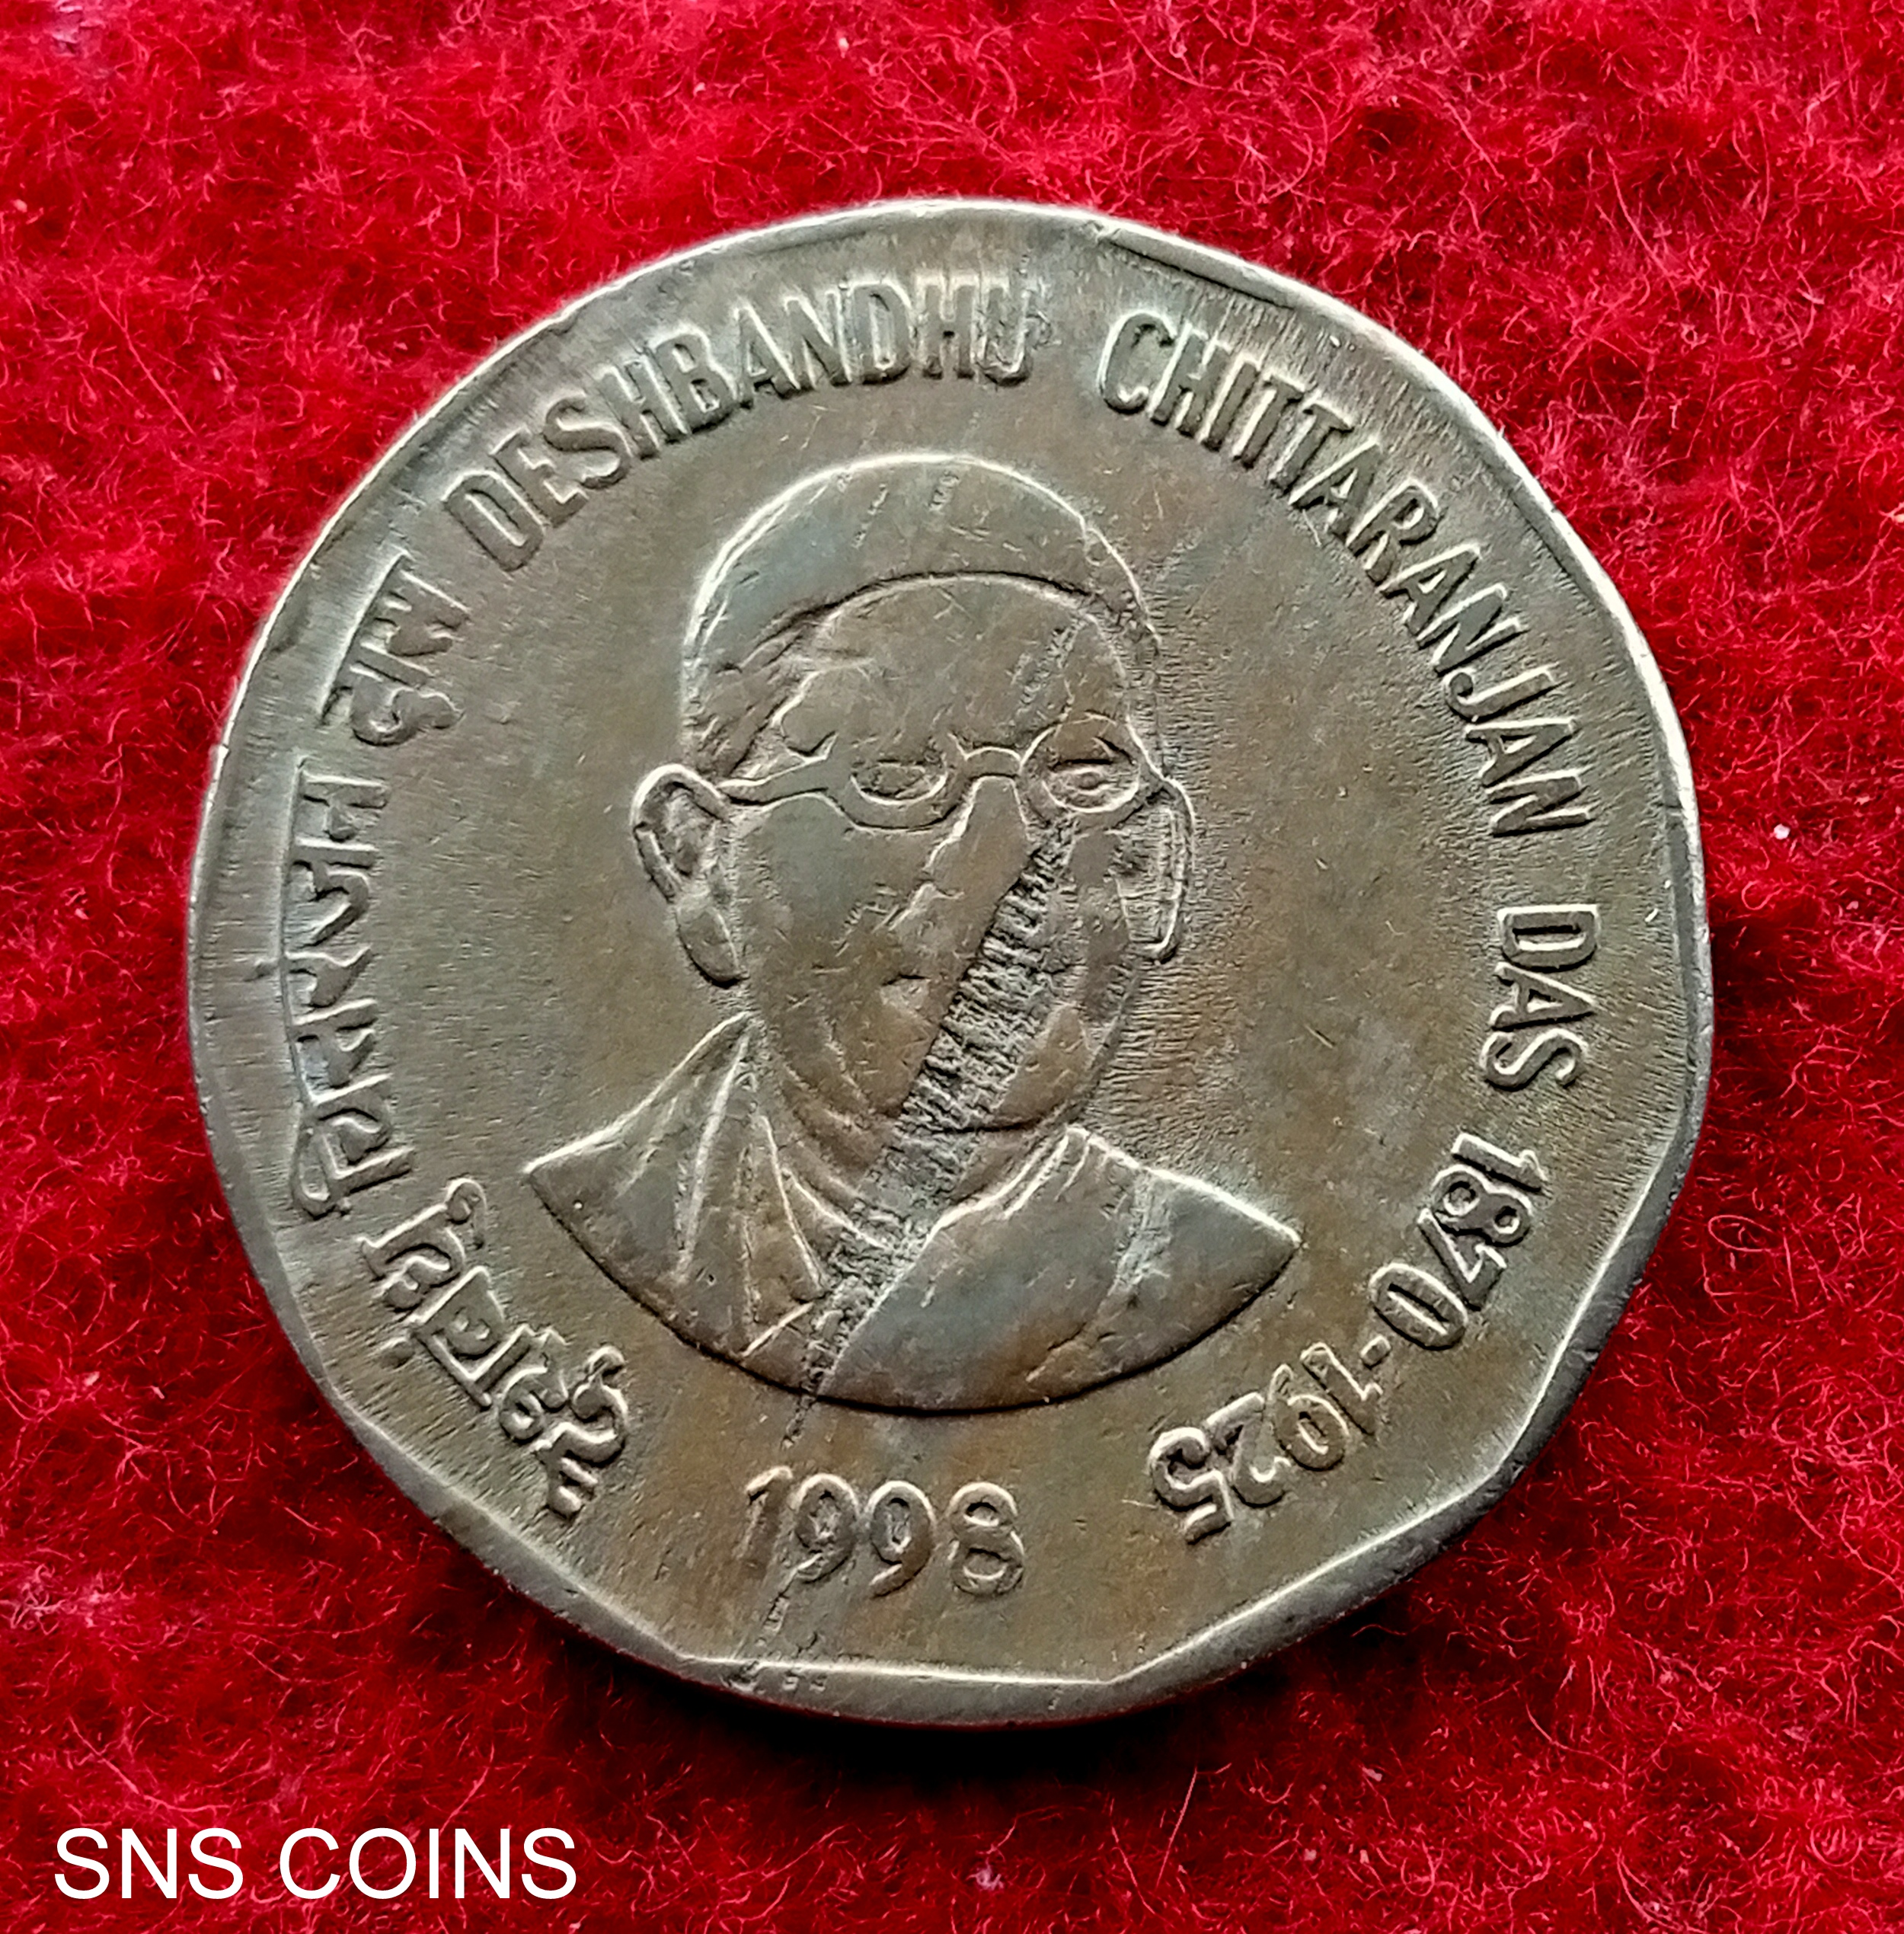 2 Rupees Lamination Error 1998 Coin (Deshbandhu Chittaranjan)